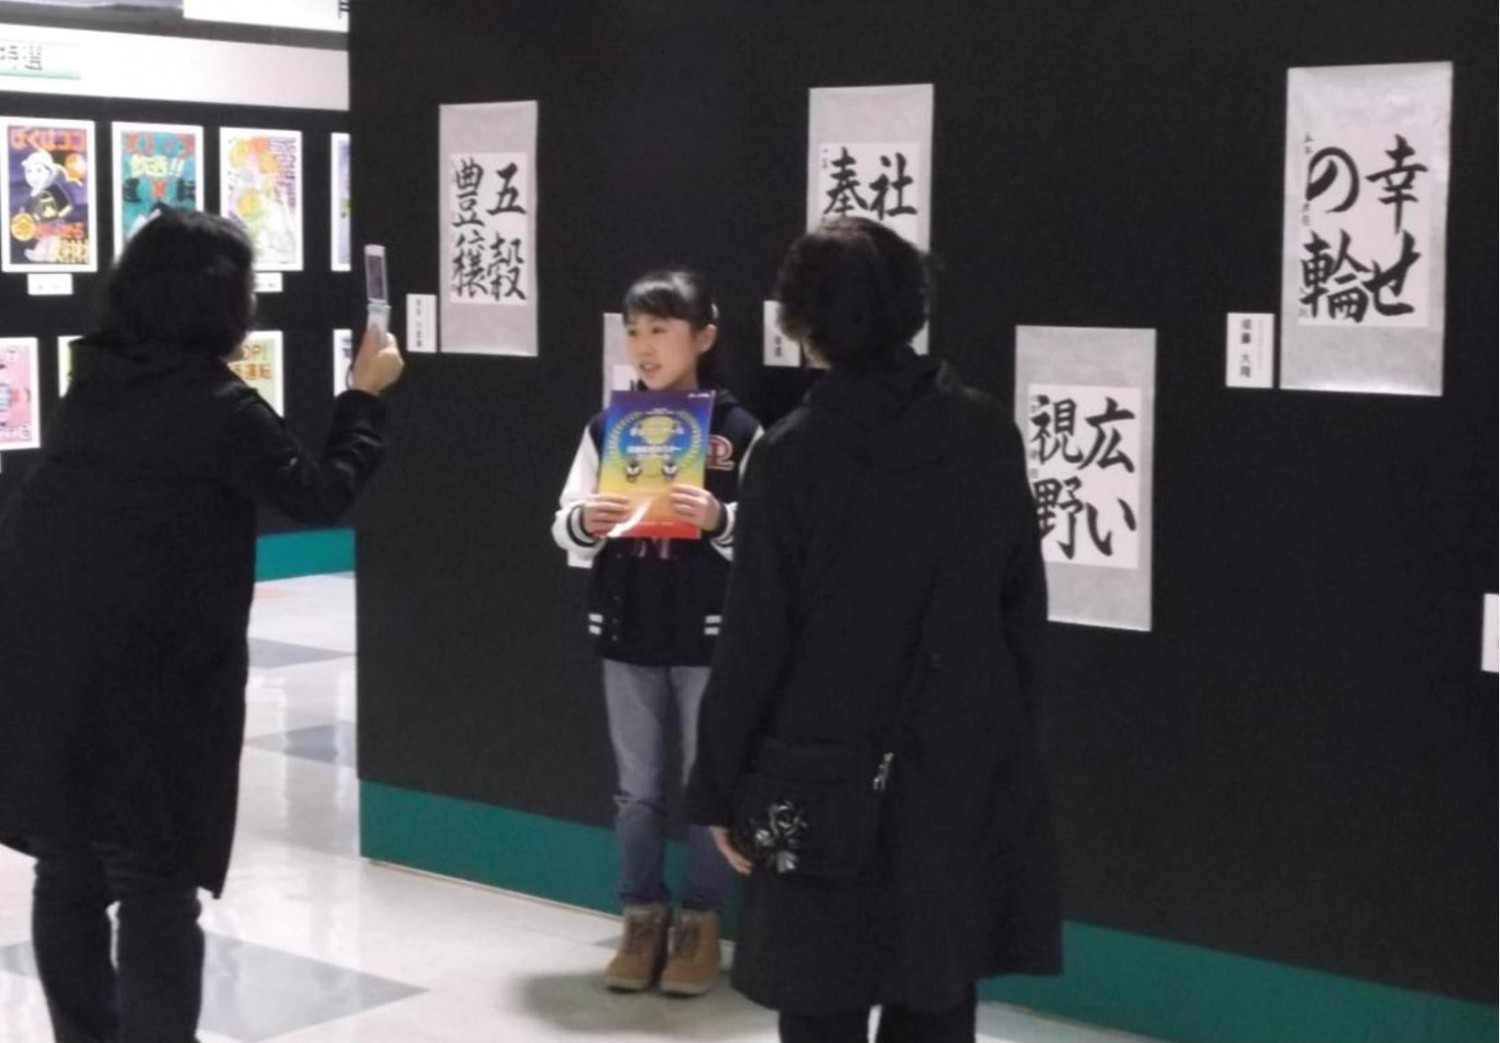 JA共済青森県小・中学生書道・交通安全ポスターコンクール展示会